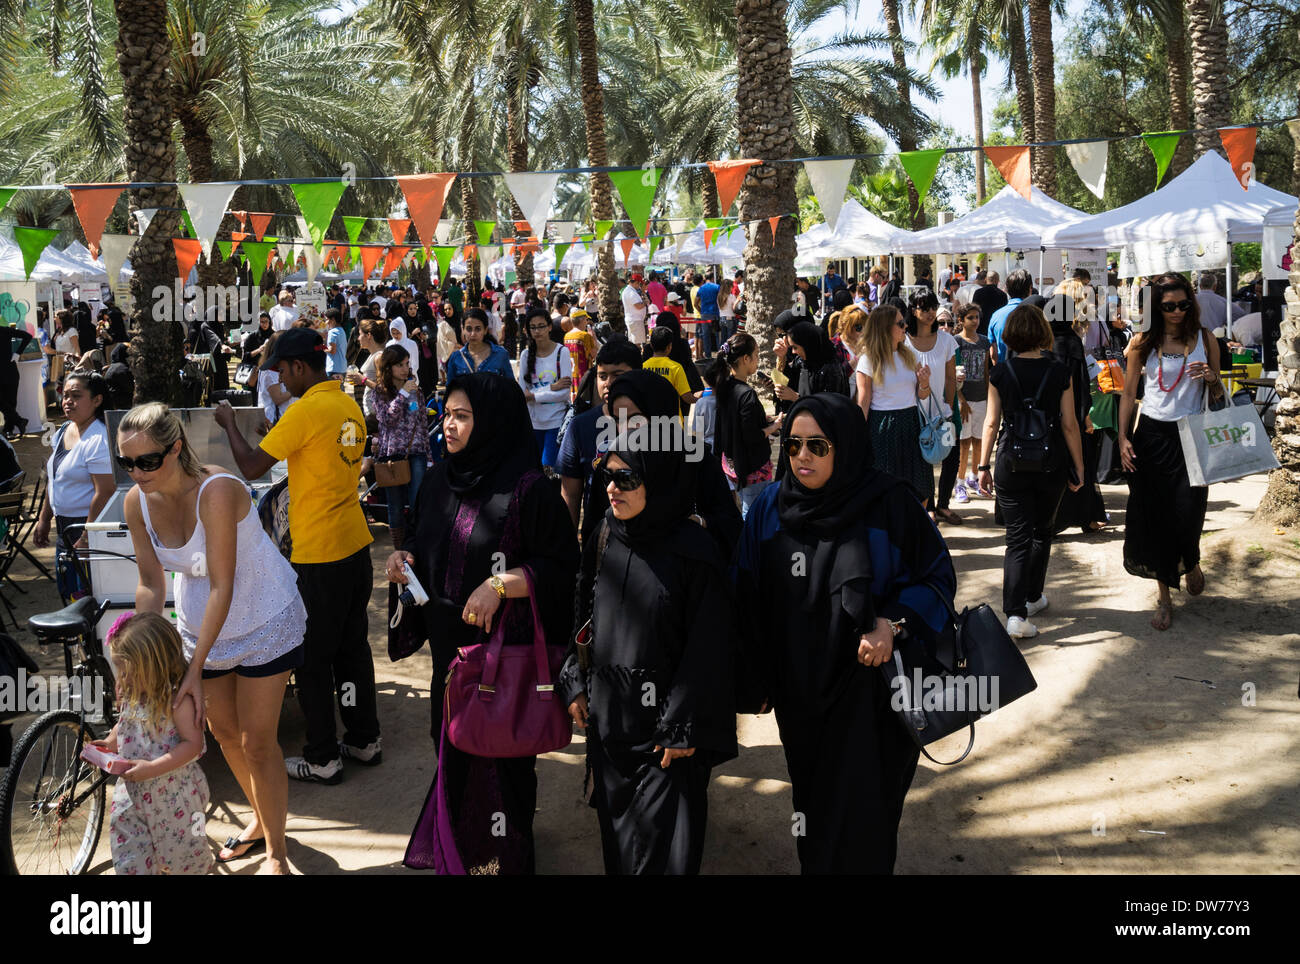 Busy food market held on holiday Fridays in Al Safa Park in Dubai United Arab Emirates Stock Photo